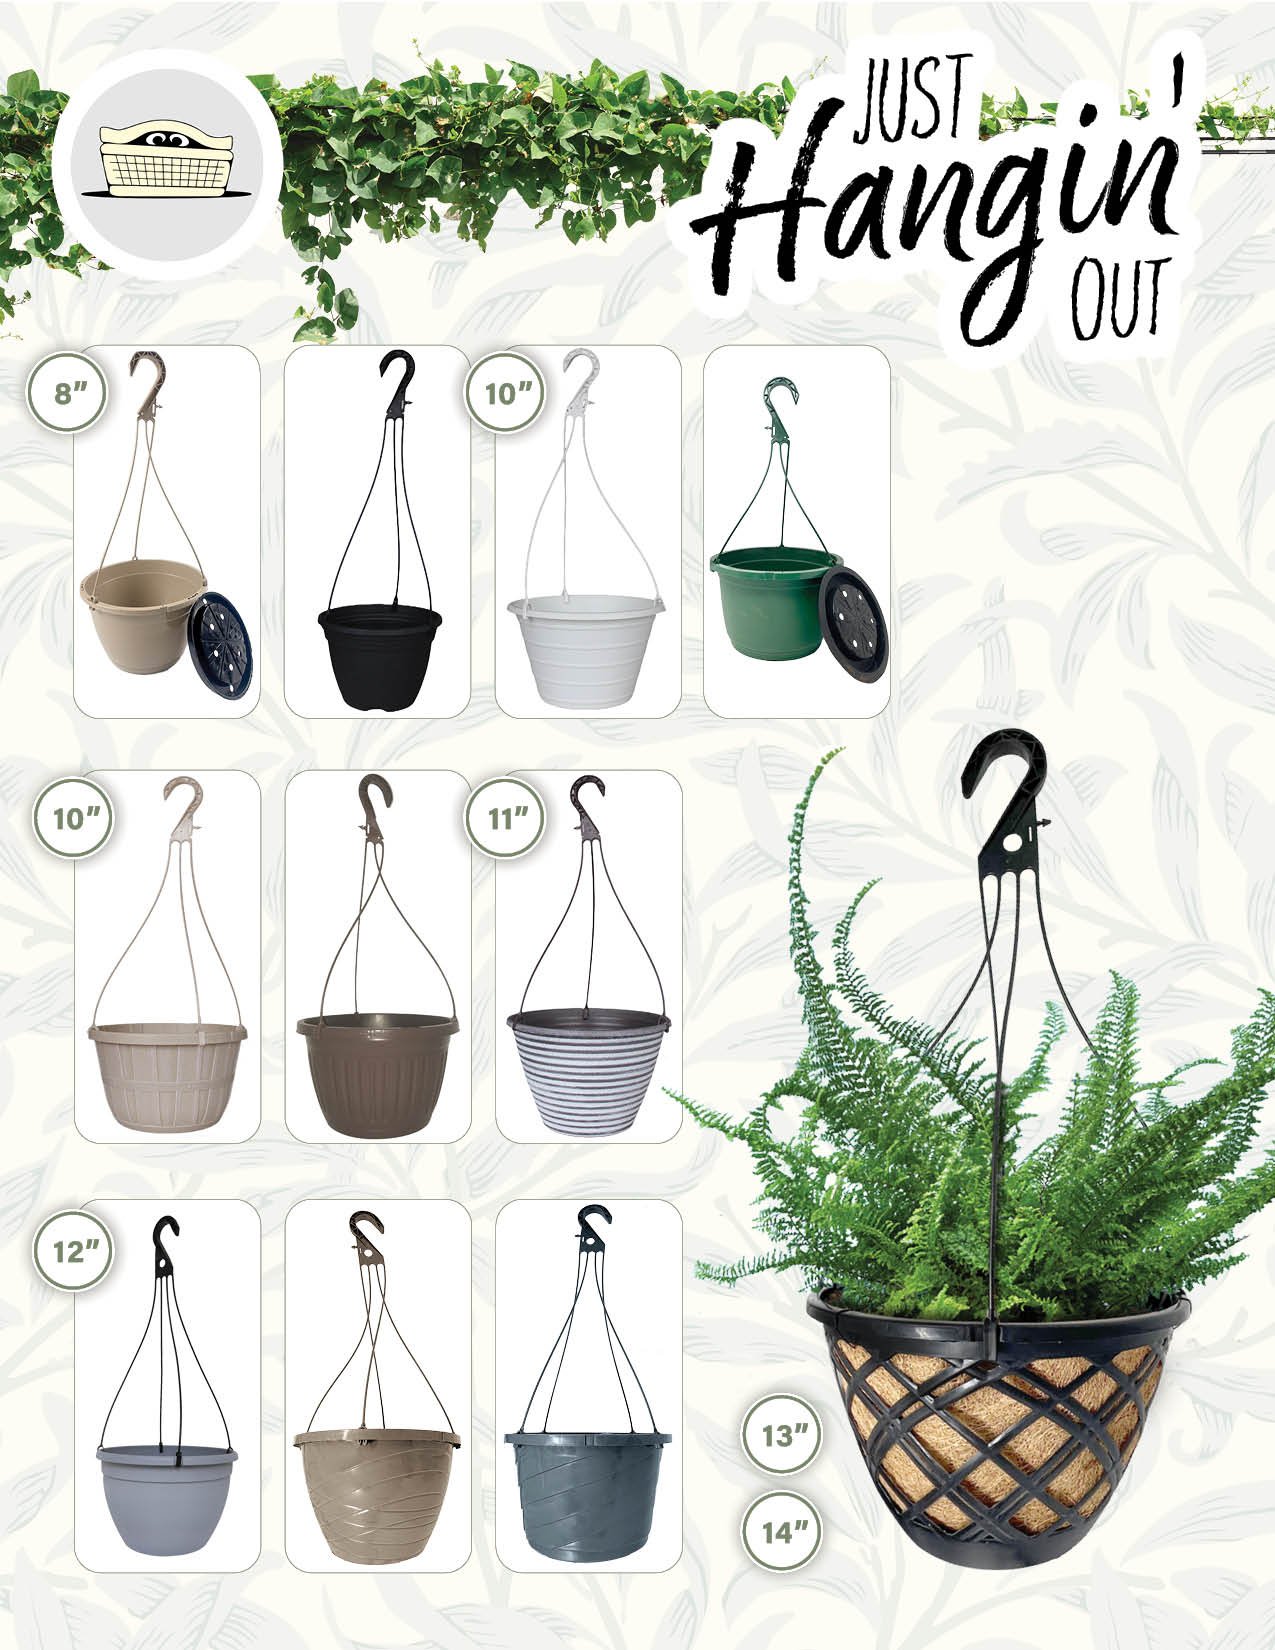 03-27-24 Plastic Hanging Baskets with Hangers.jpg